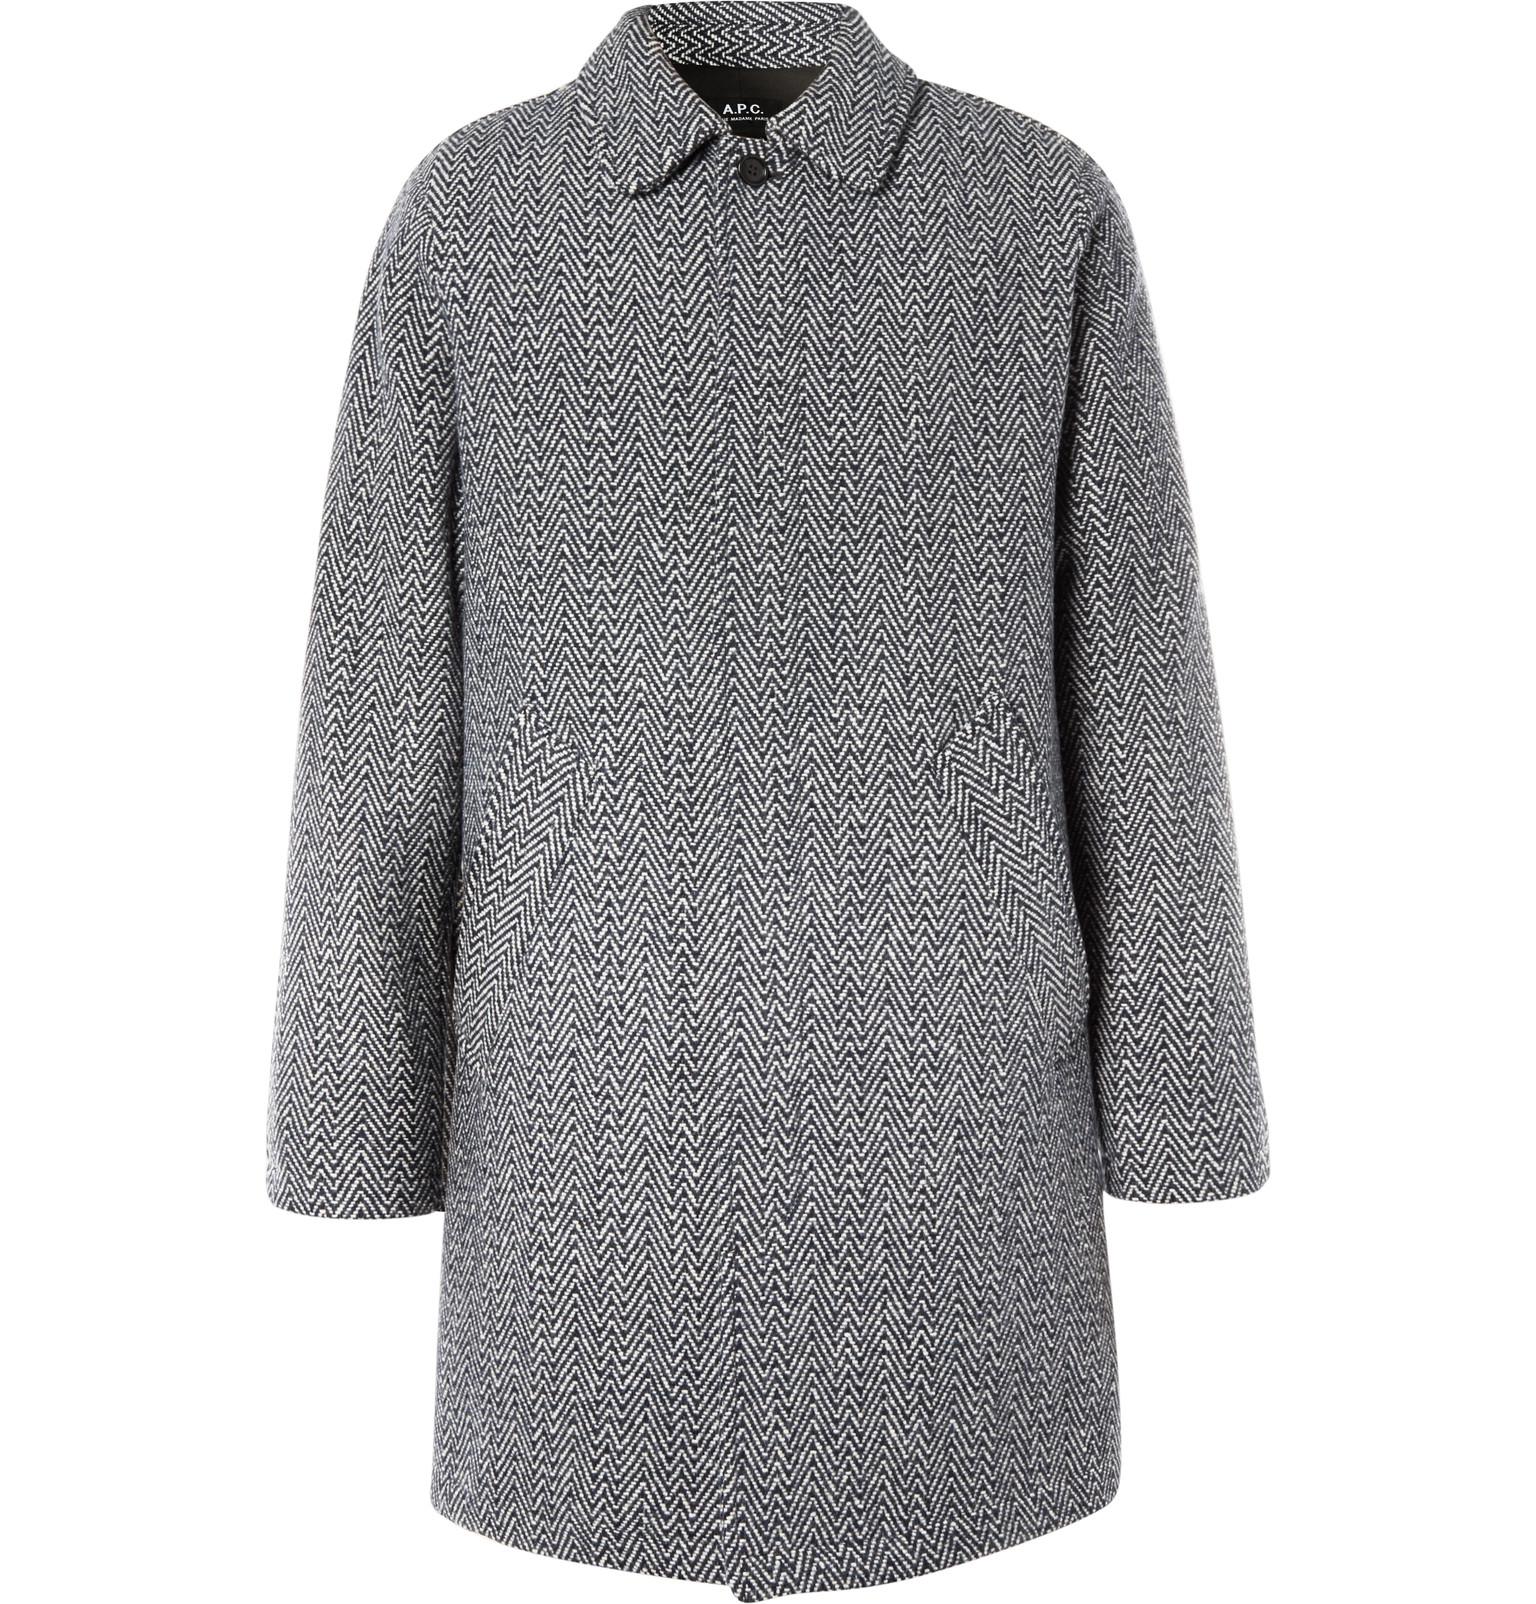 A.P.C. Ivan Herringbone Wool-blend Coat in Grey for Men - Lyst